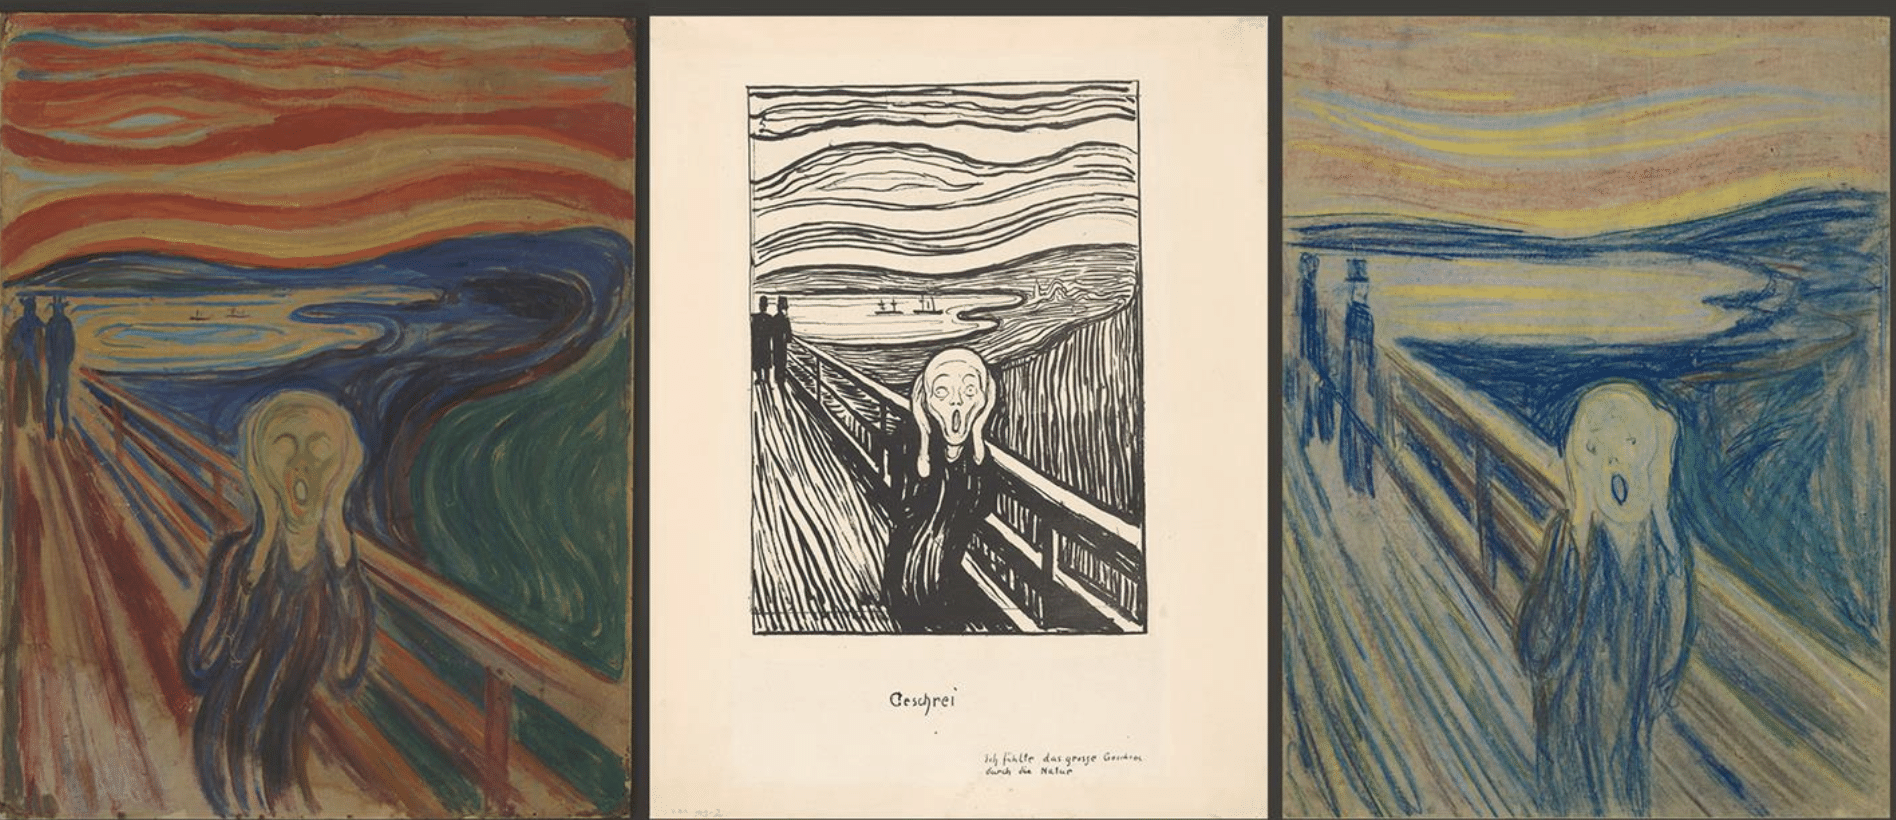 Versions of Edvard Munch's The Scream